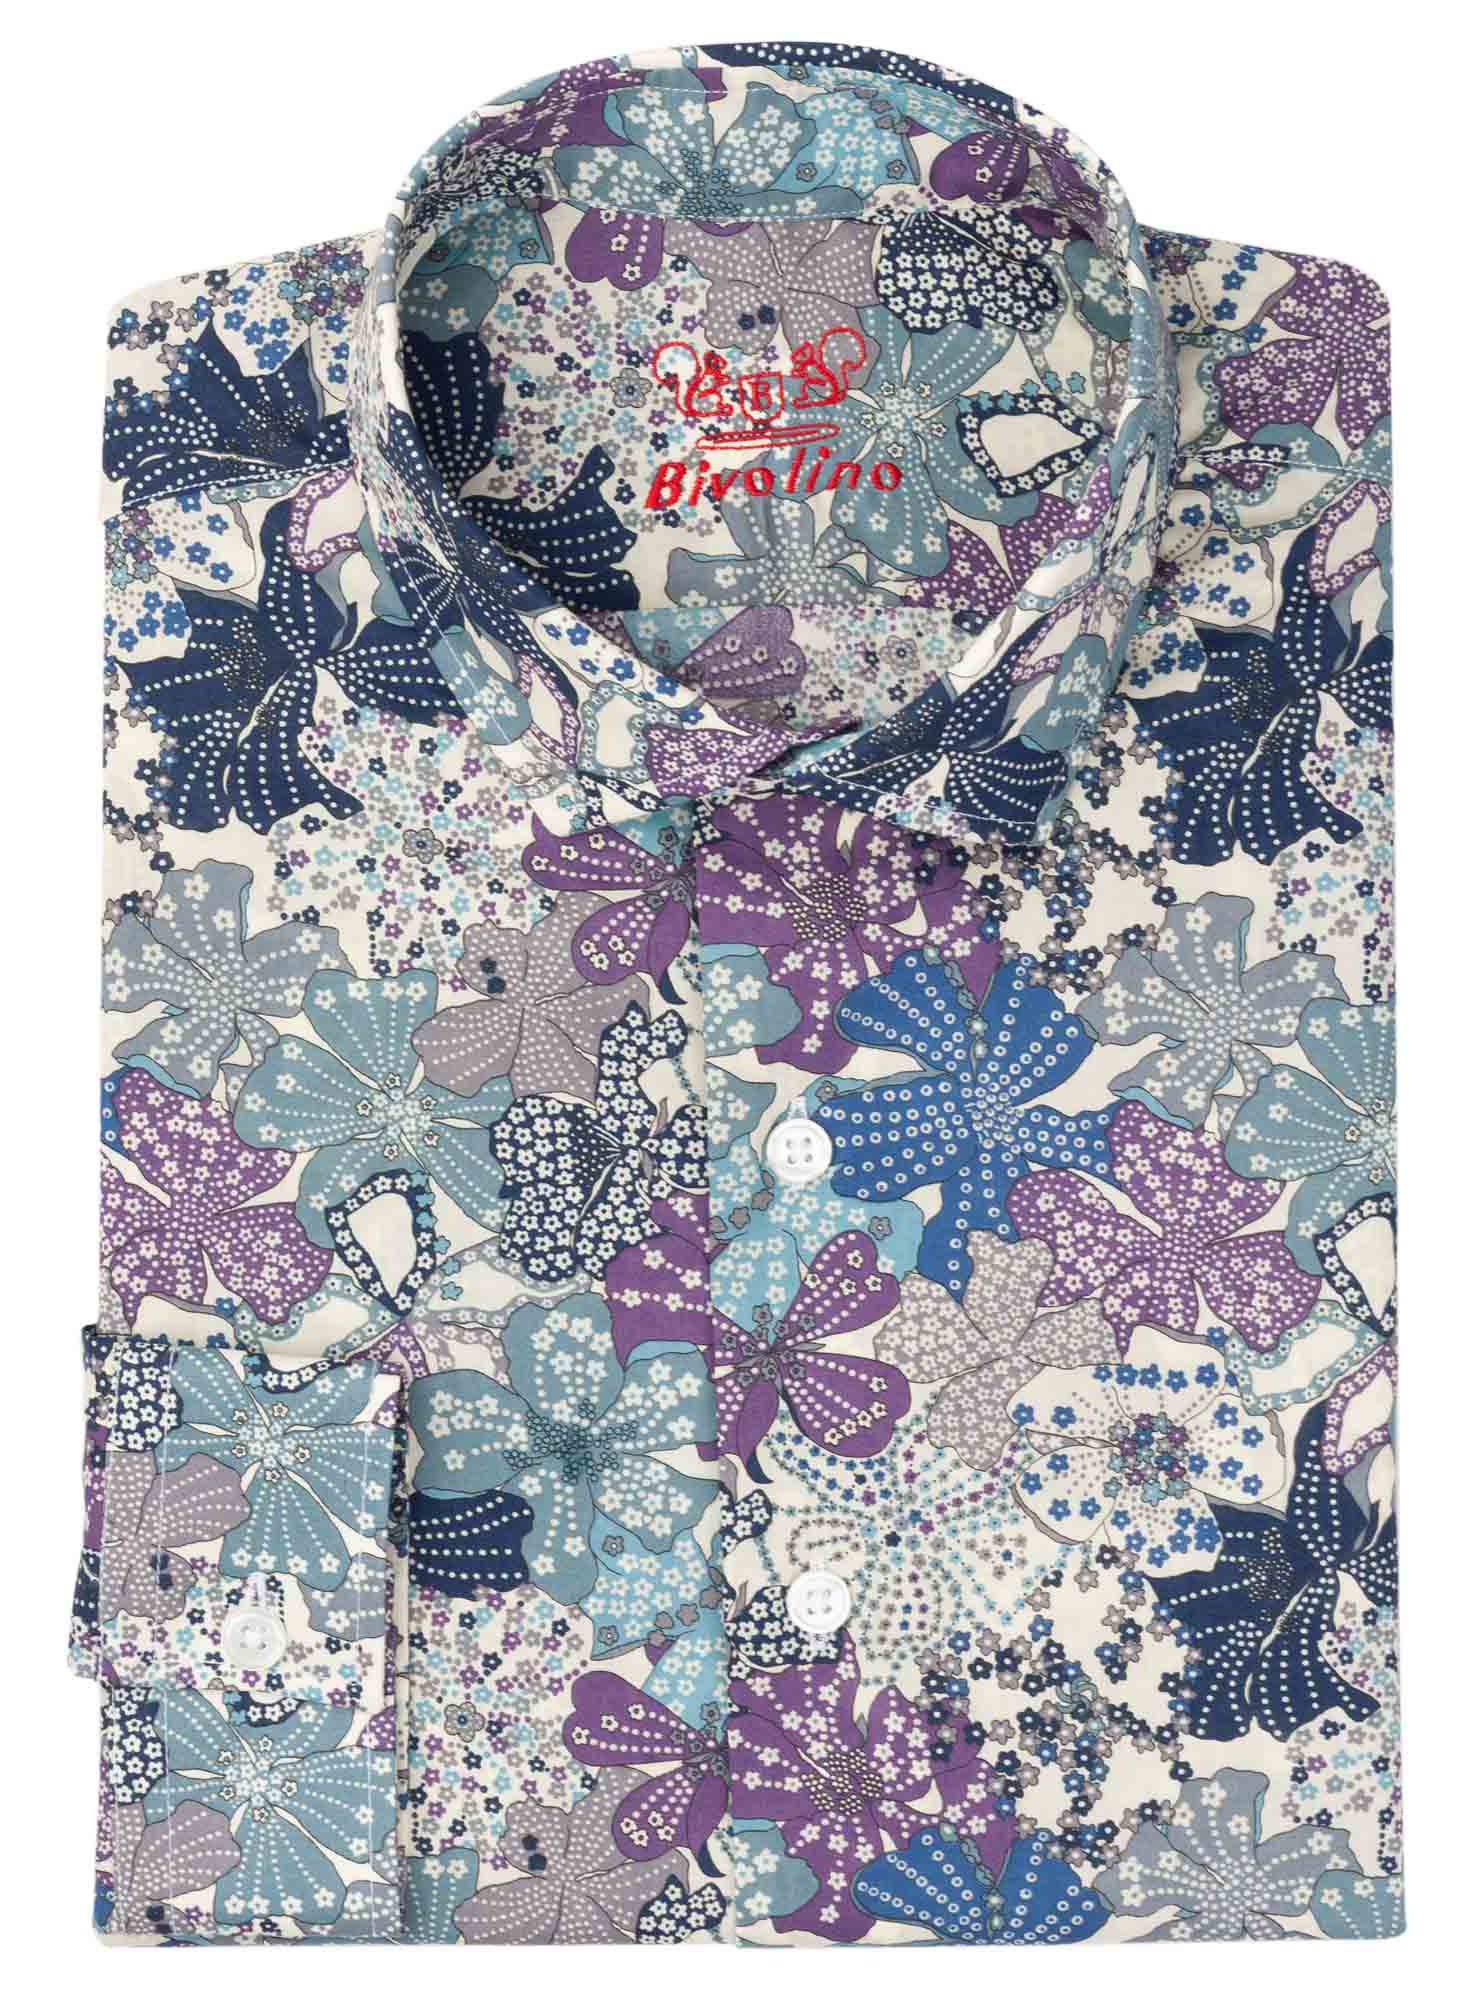 LIBERTINO  - Men's shirt cotton paisley flowers - LIBERTY 7